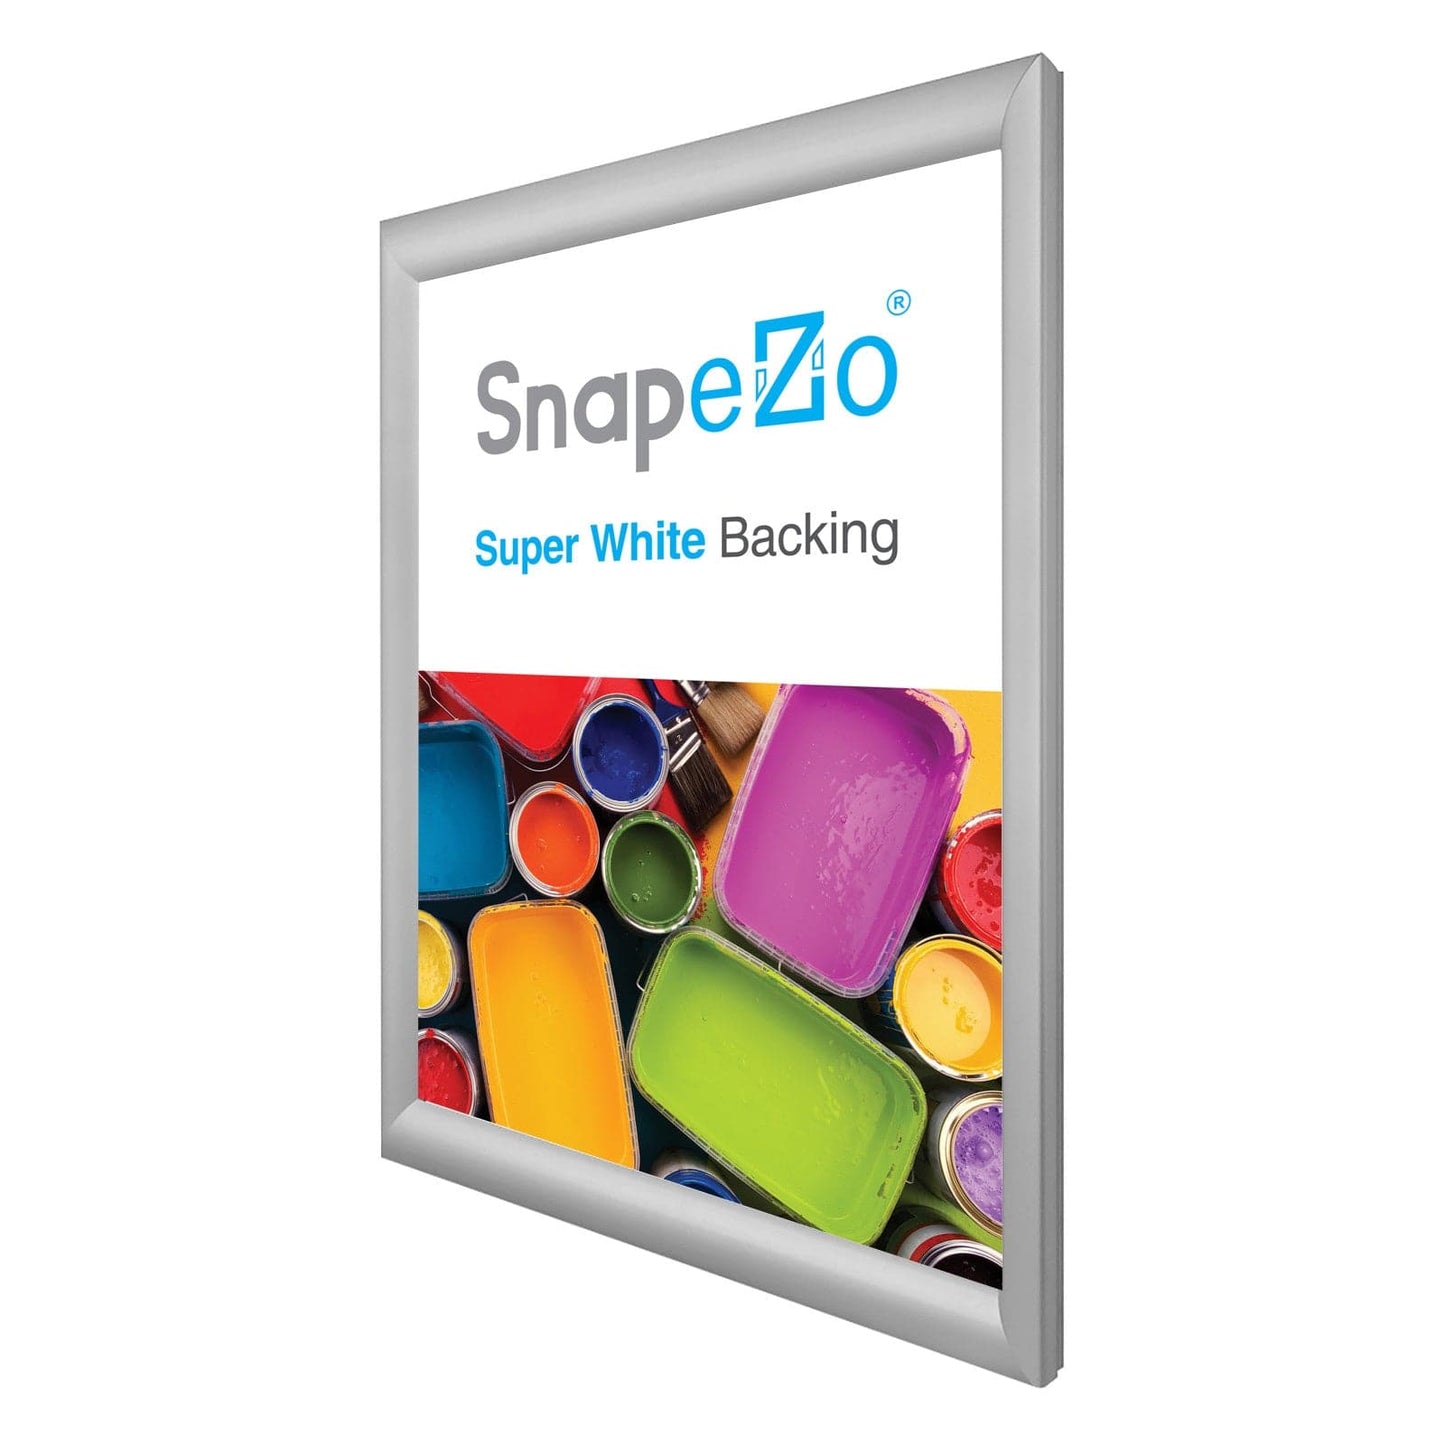 17x23 Silver SnapeZo® Snap Frame - 1.2" Profile - Snap Frames Direct